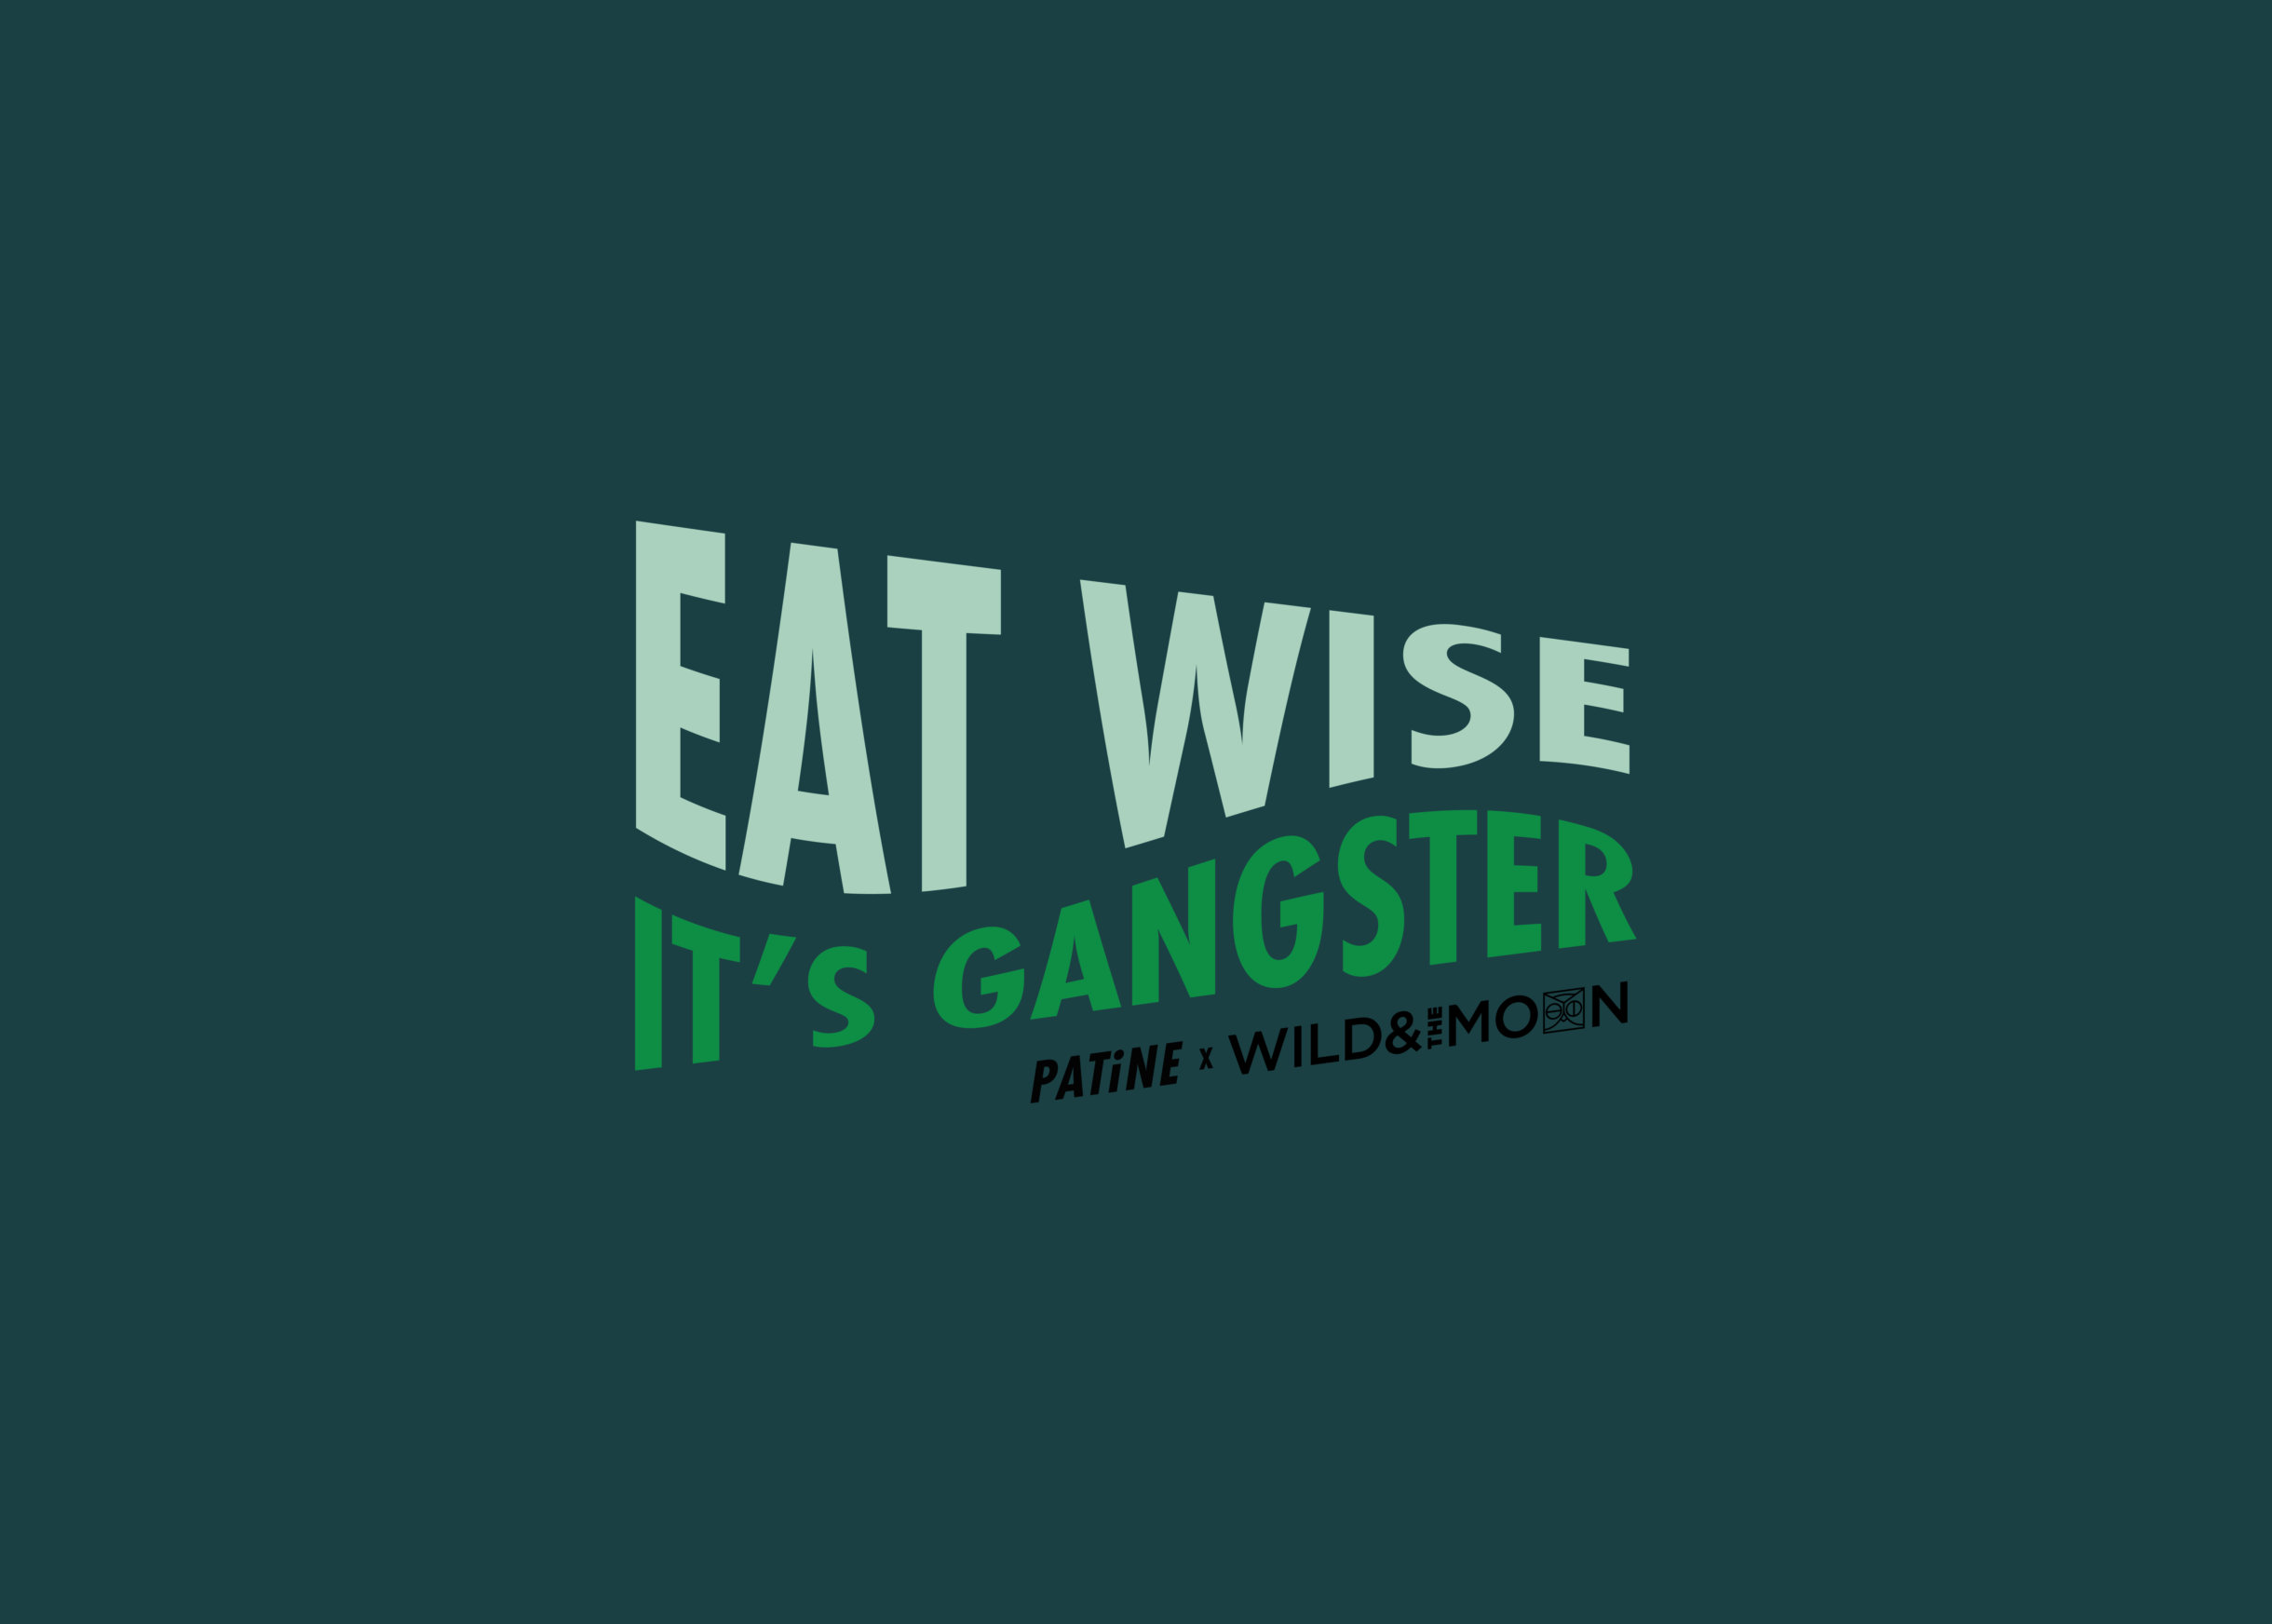 Eat Wise it's gangster